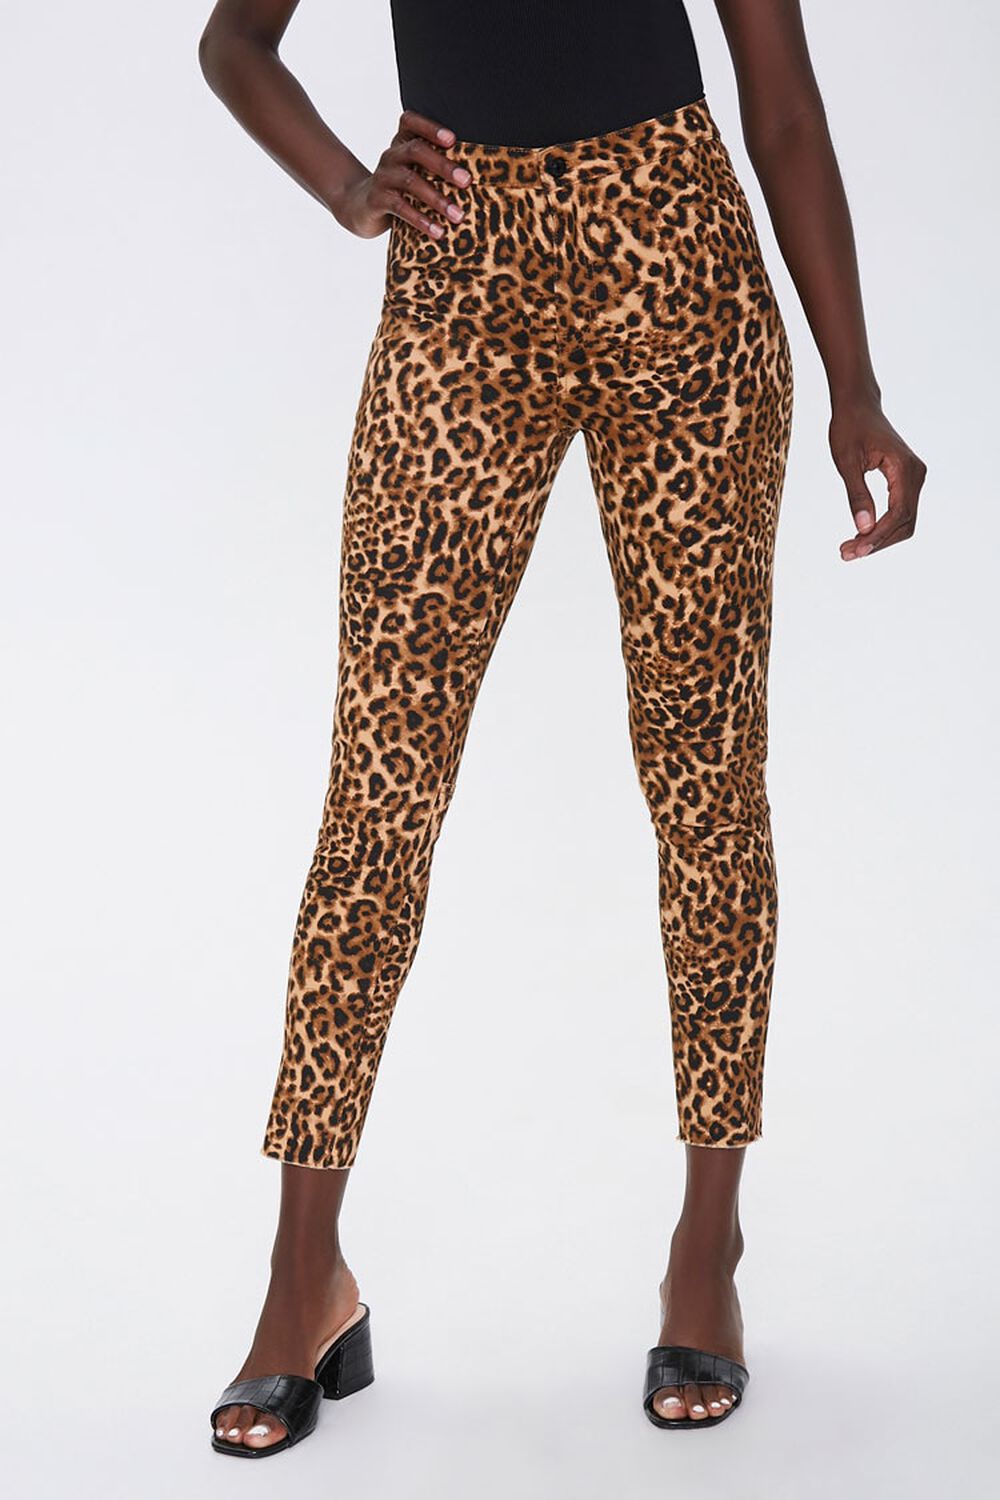 TAN/BROWN Leopard Print Skinny Jeans, image 2